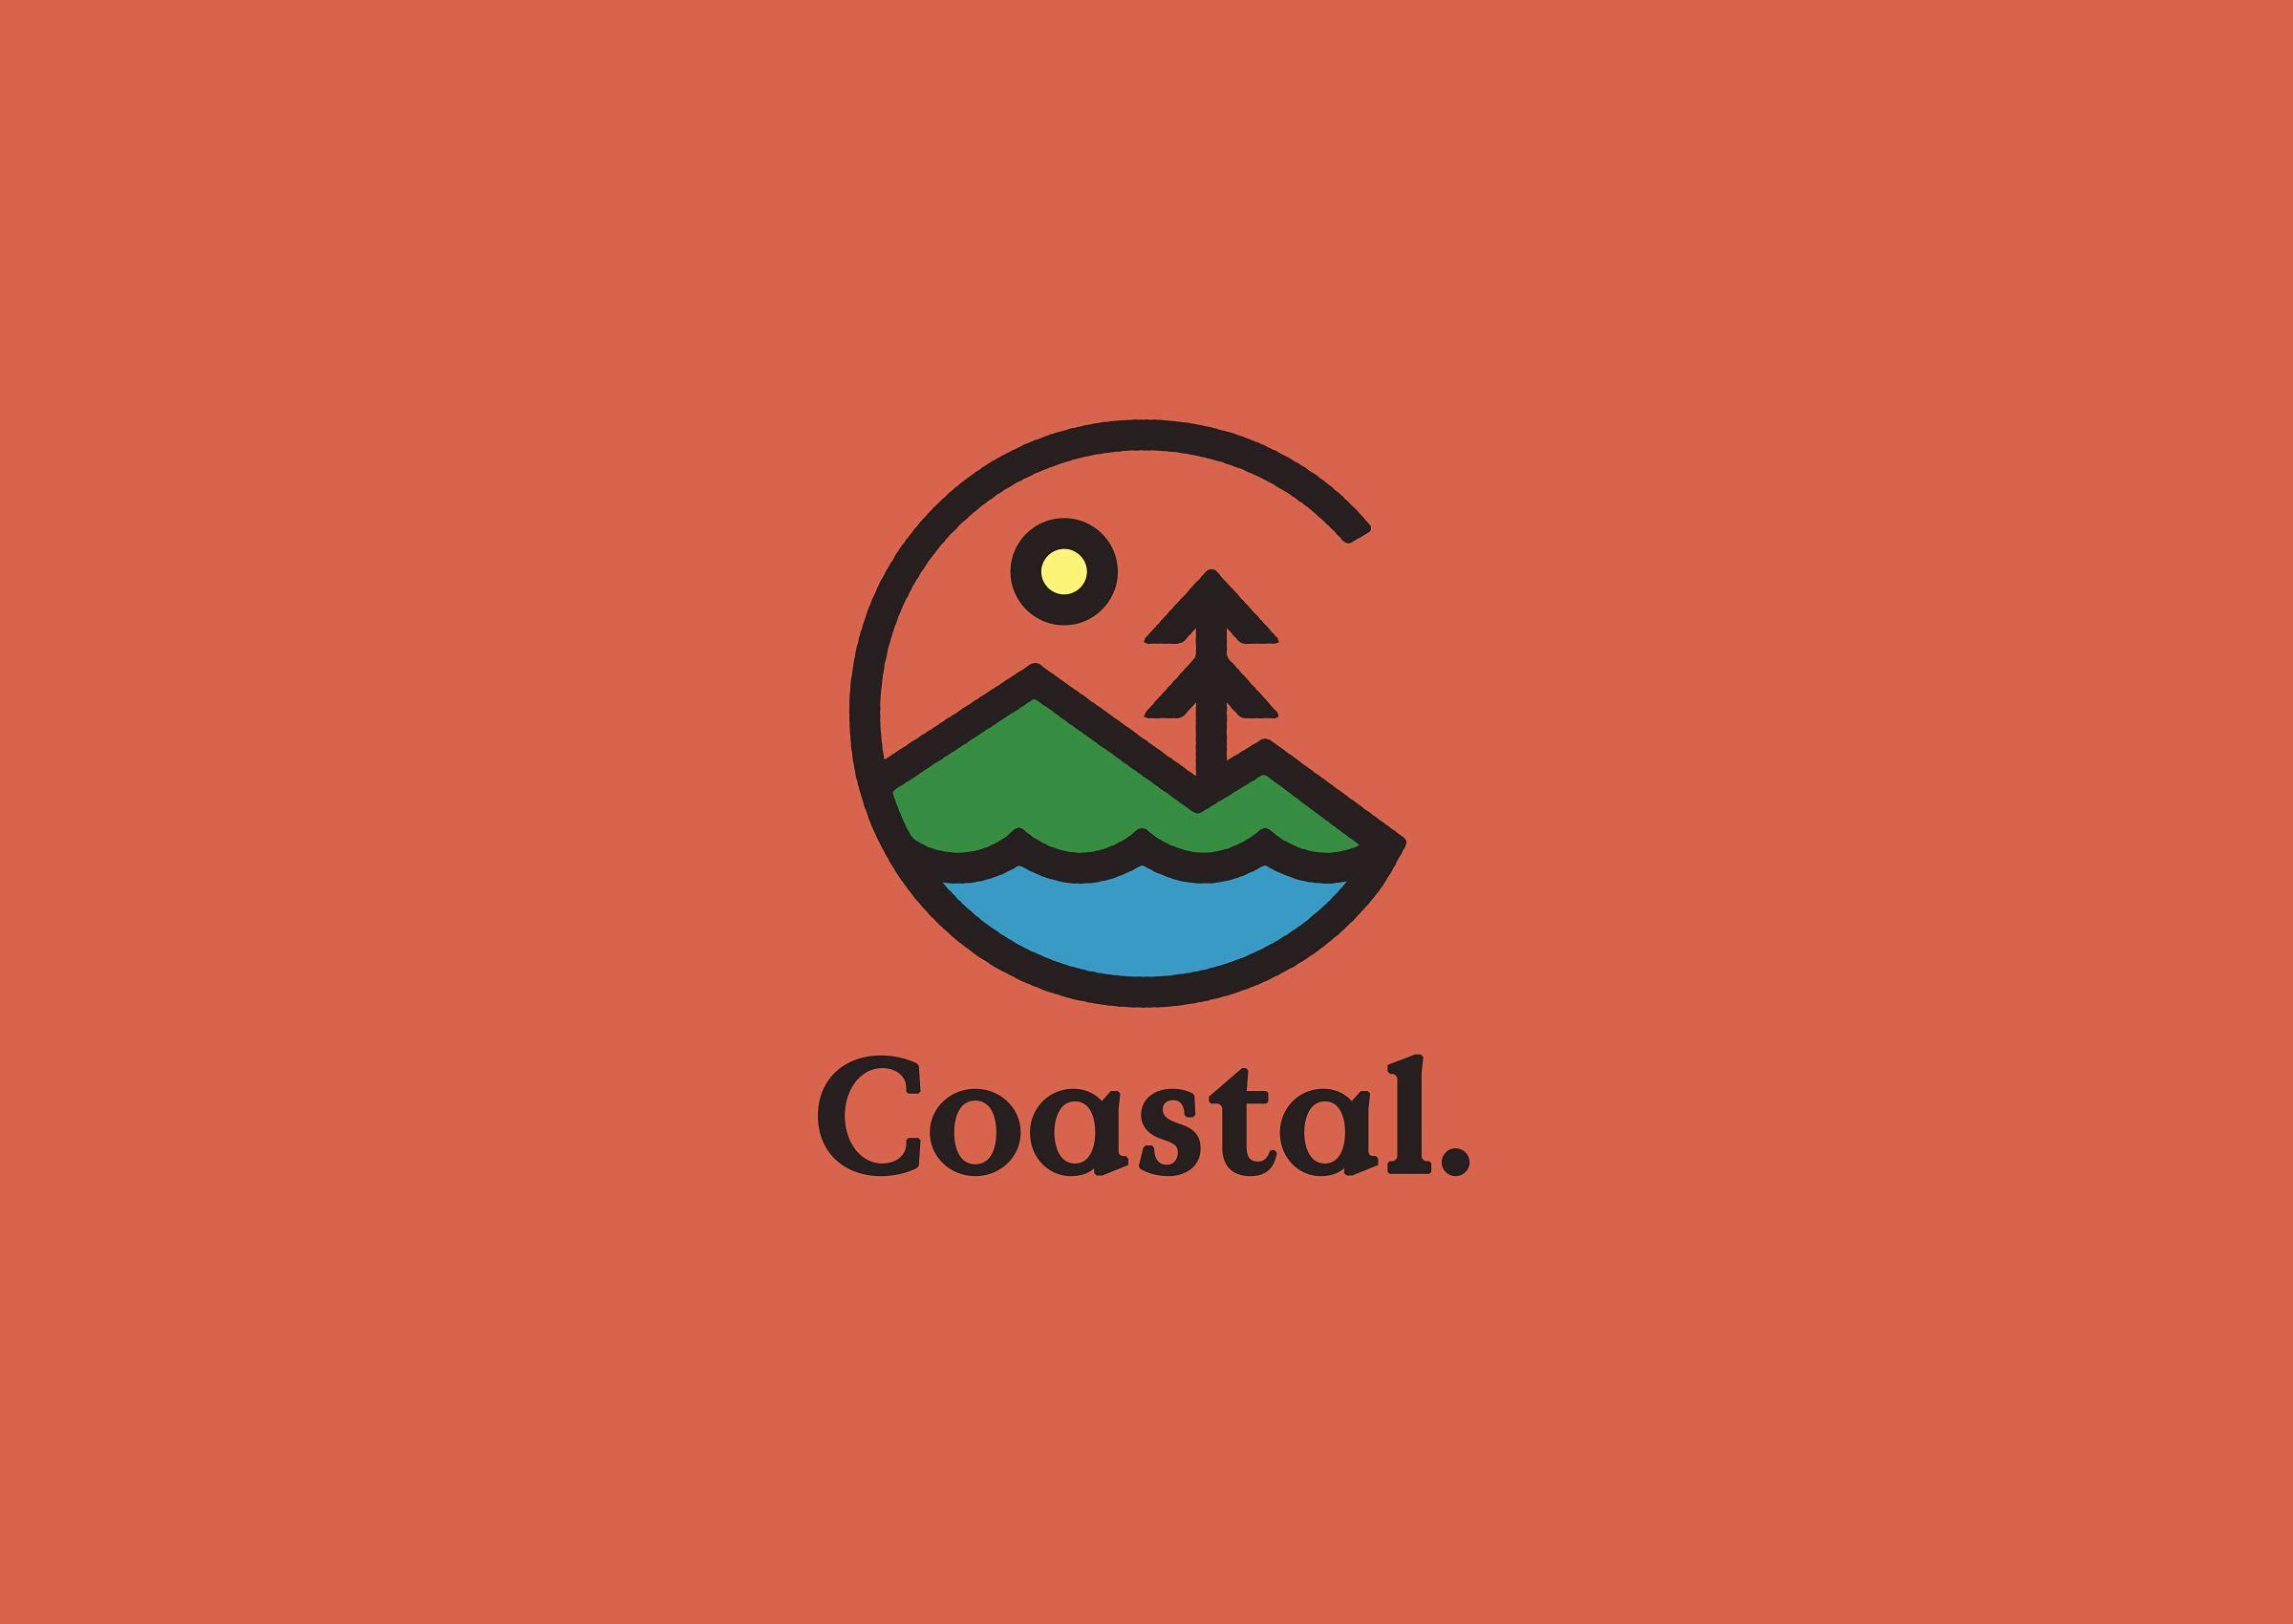 Coastal Logo - Coastal Logo | design: branding + logos | Wedding logo design, Logos ...